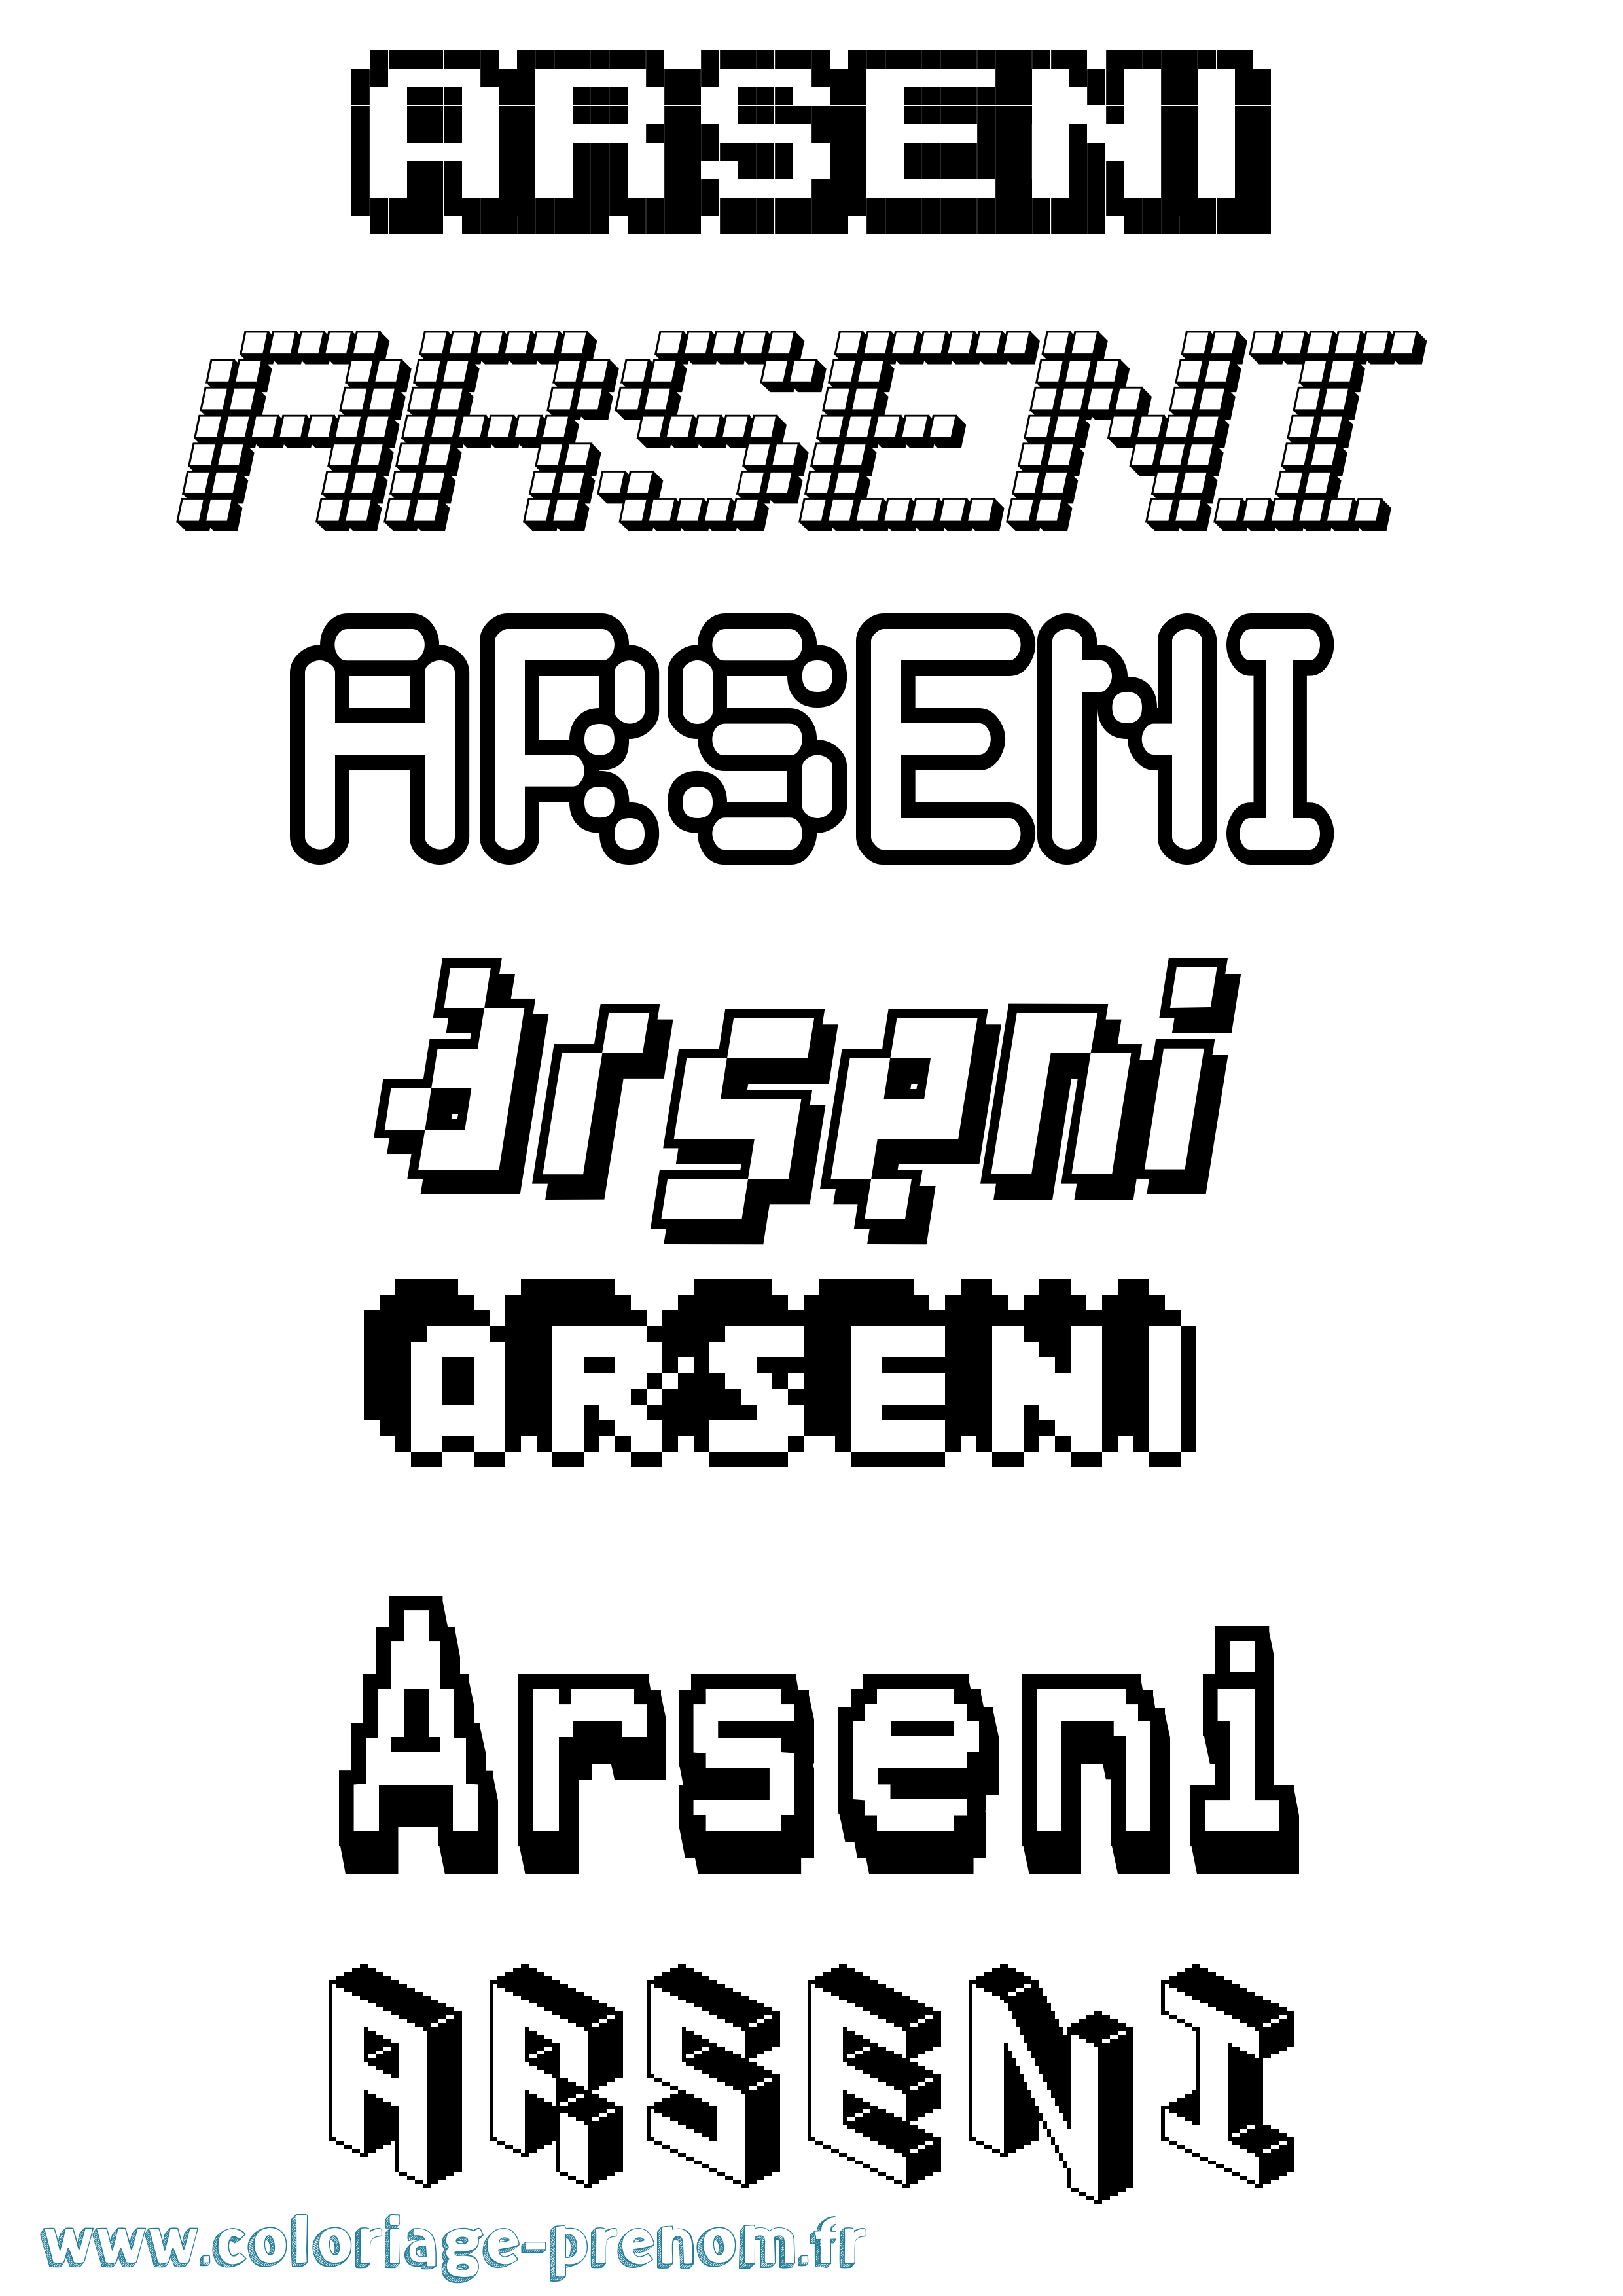 Coloriage prénom Arseni Pixel